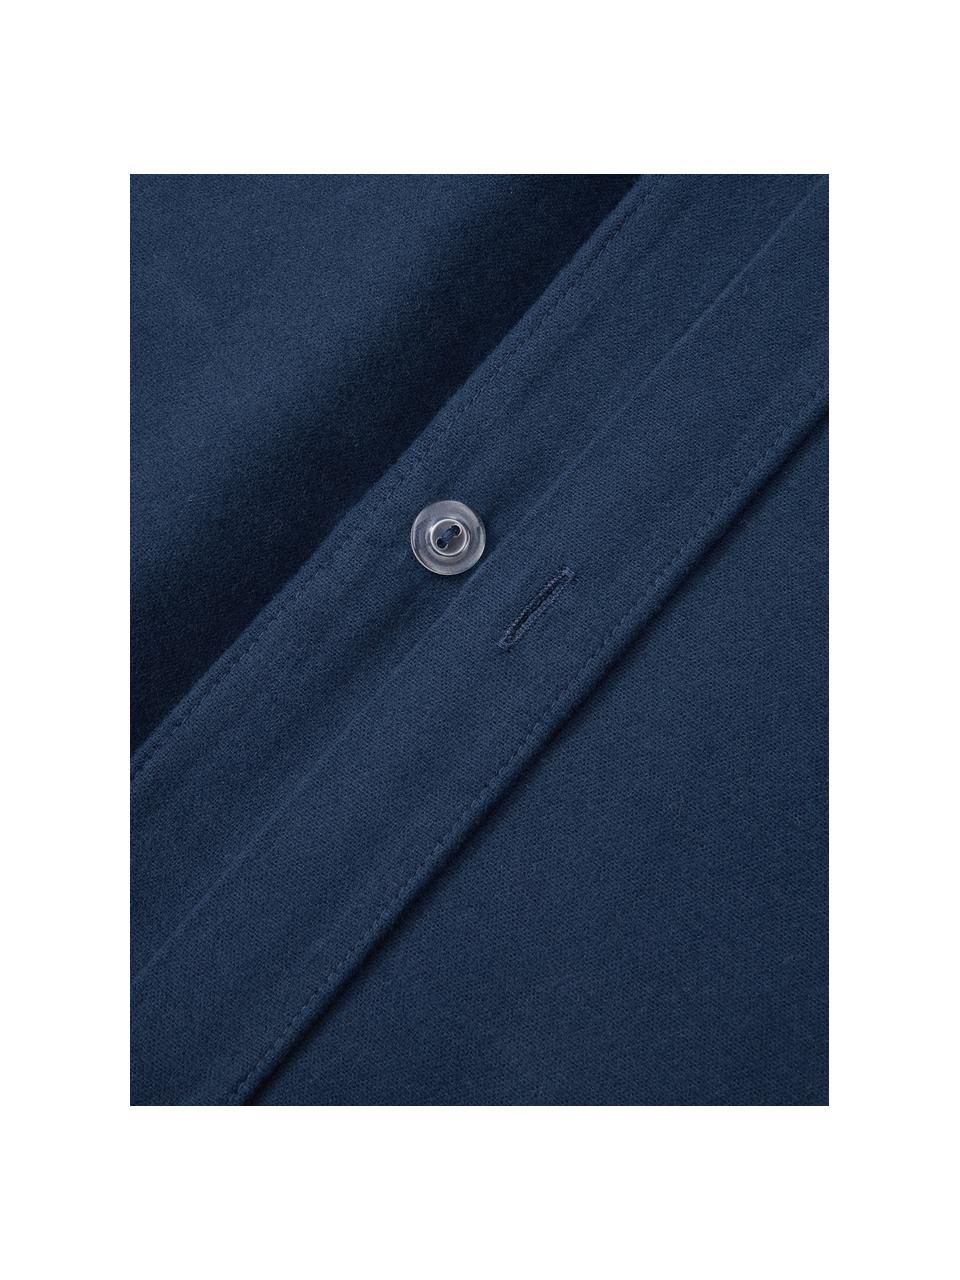 Flanell-Bettdeckenbezug Biba, Webart: Flanell Flanell ist ein k, Marineblau, B 135 x L 200 cm